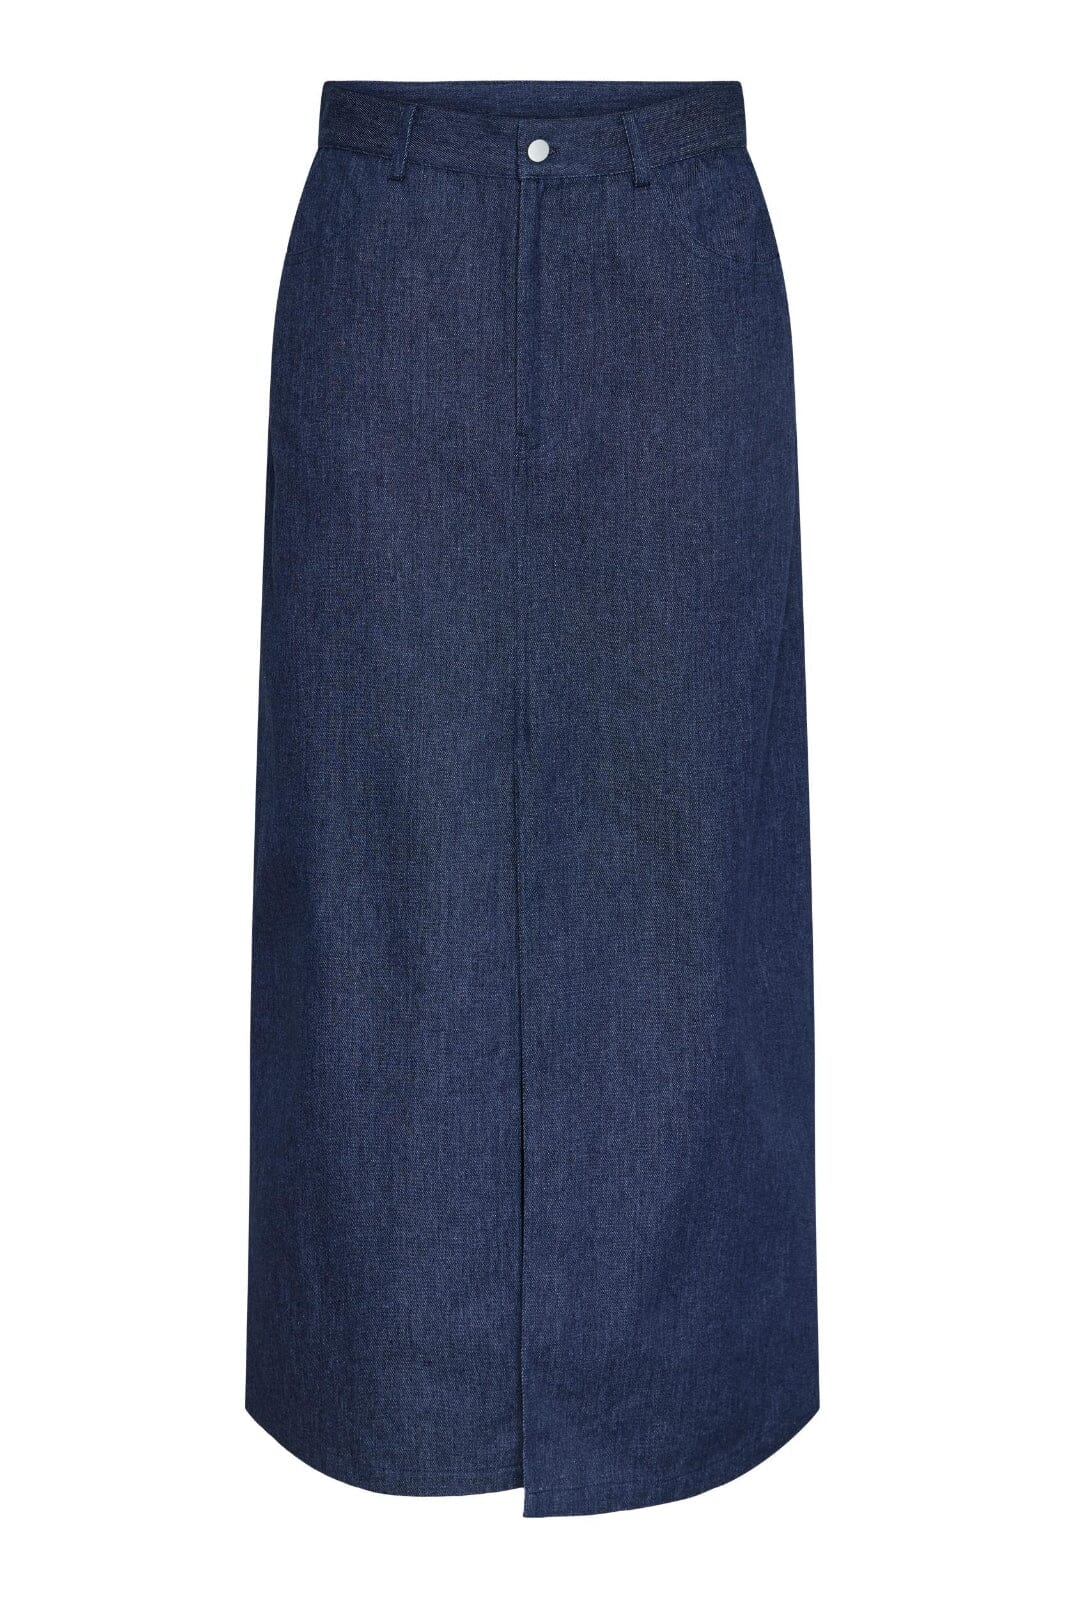 Pieces - Pcasta Long Skirt - 4503123 Dark Blue Denim Nederdele 